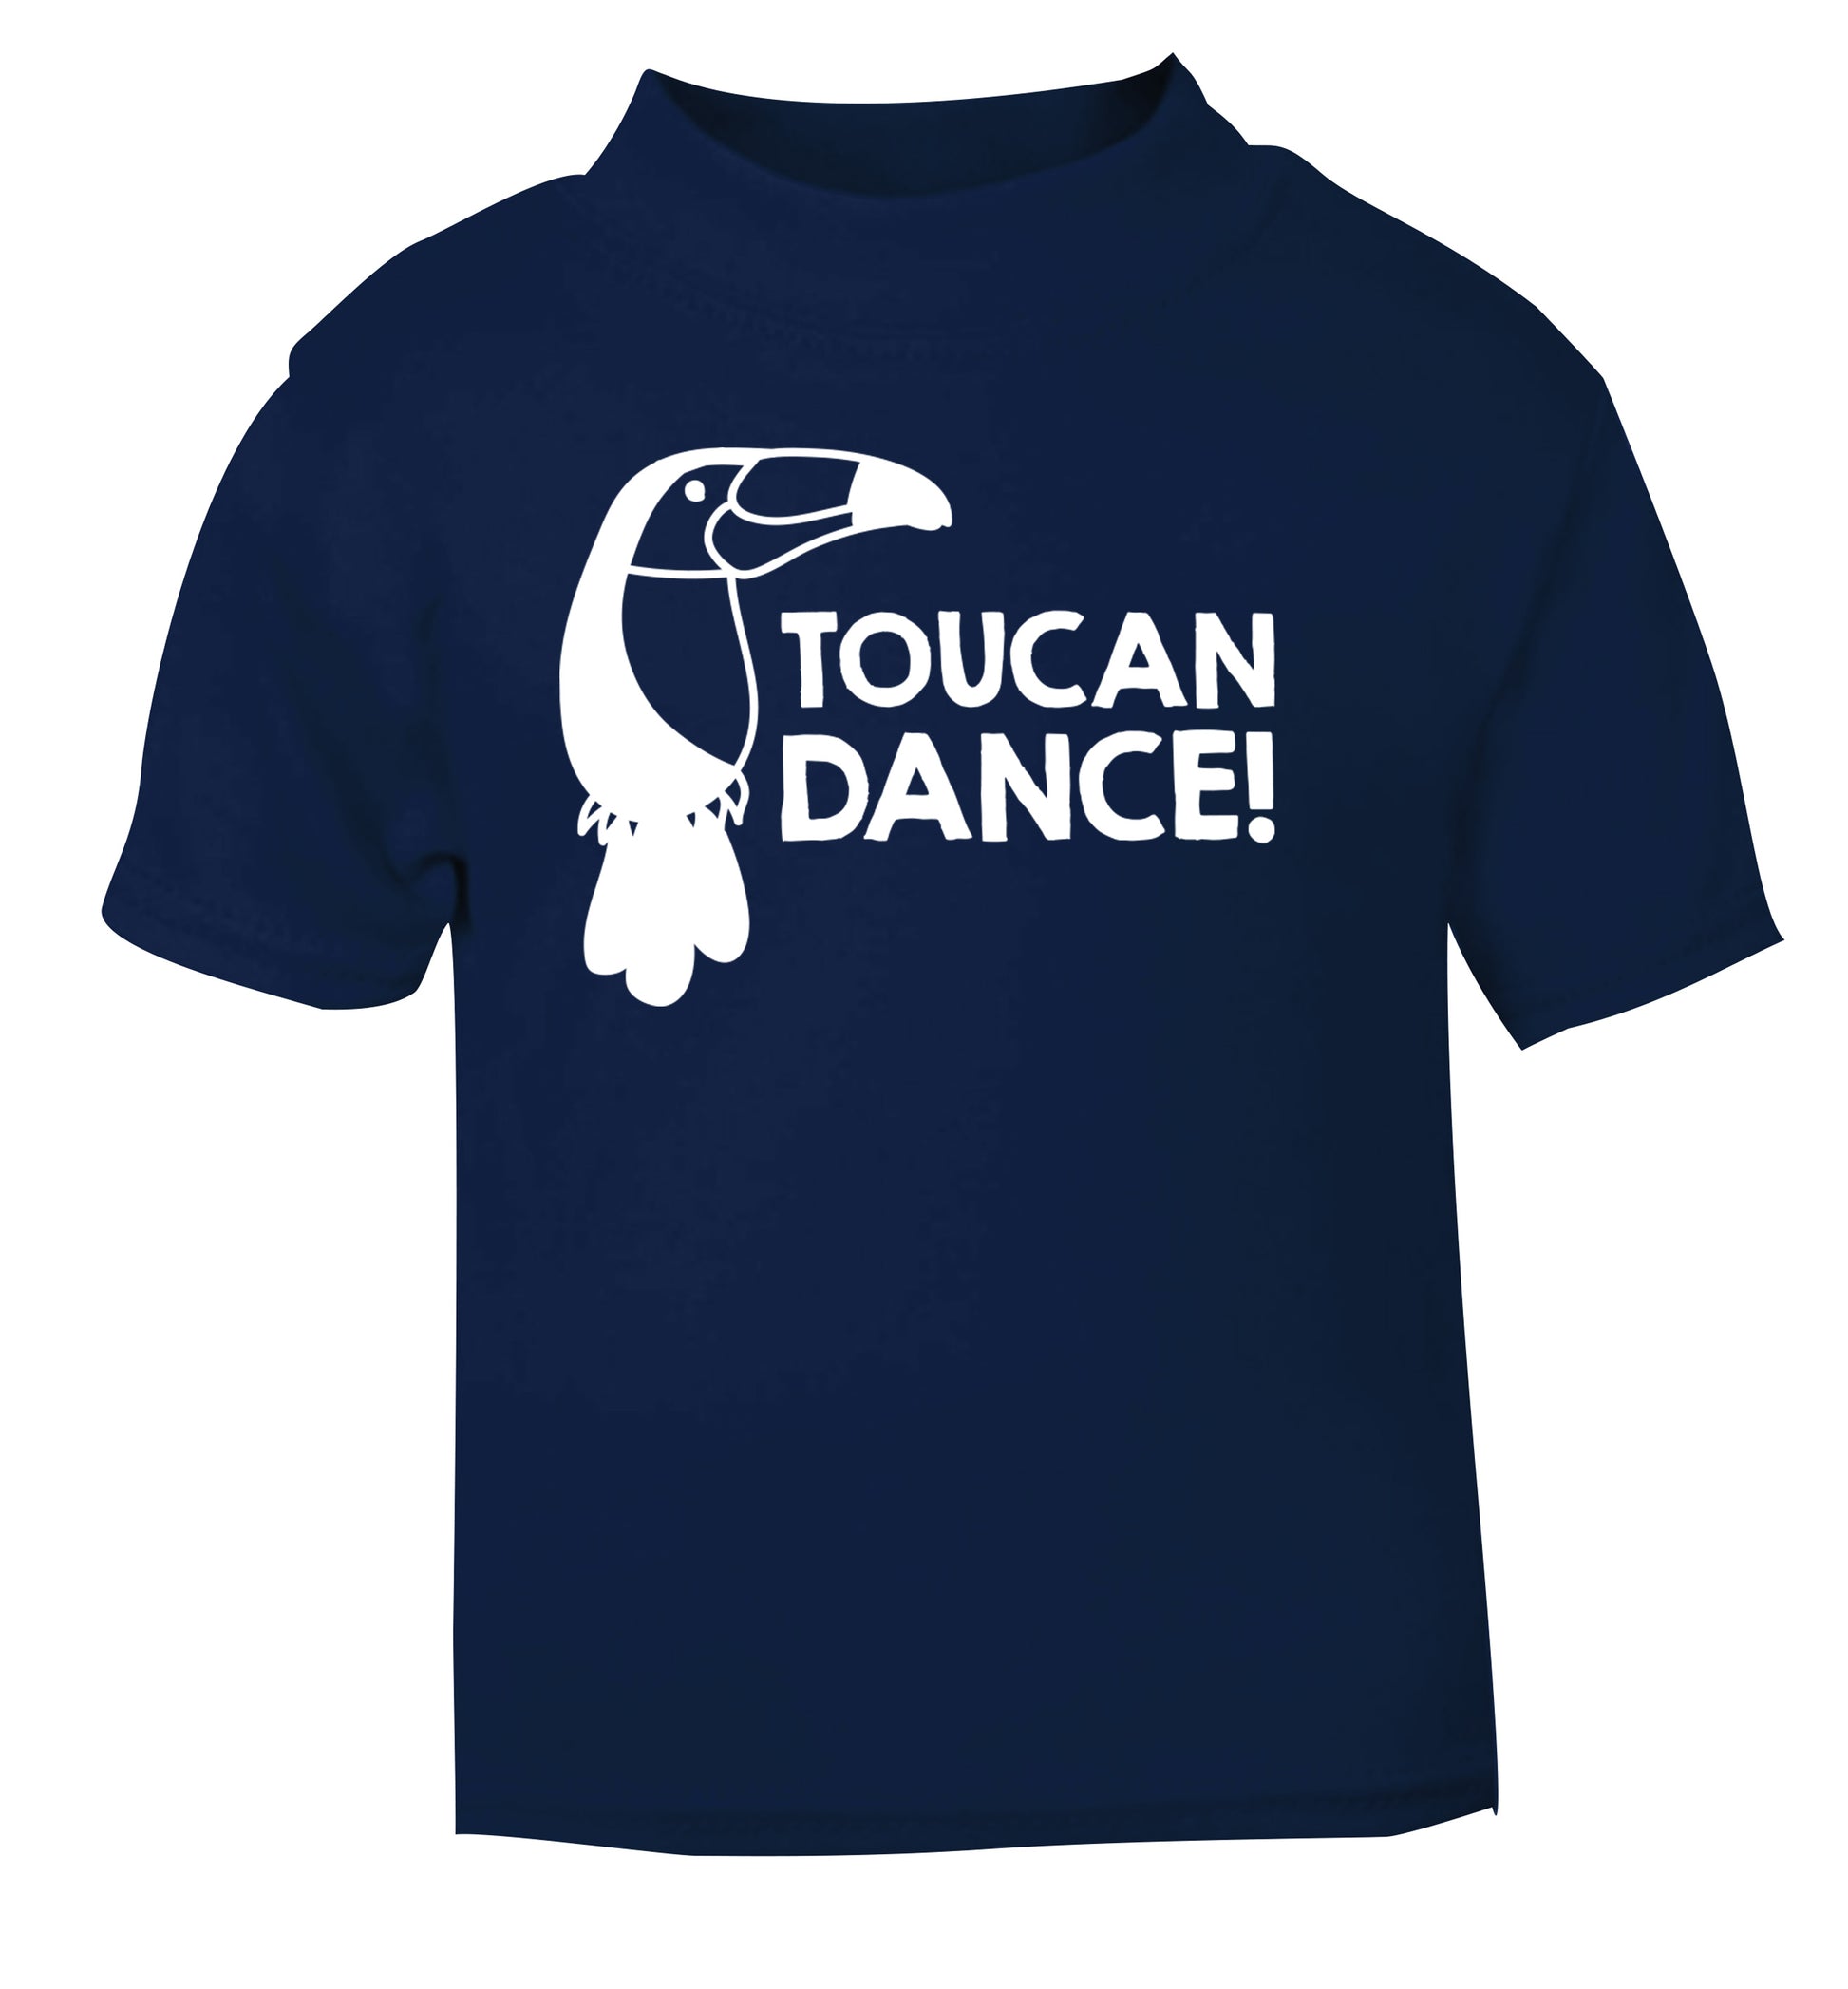 Toucan dance navy Baby Toddler Tshirt 2 Years